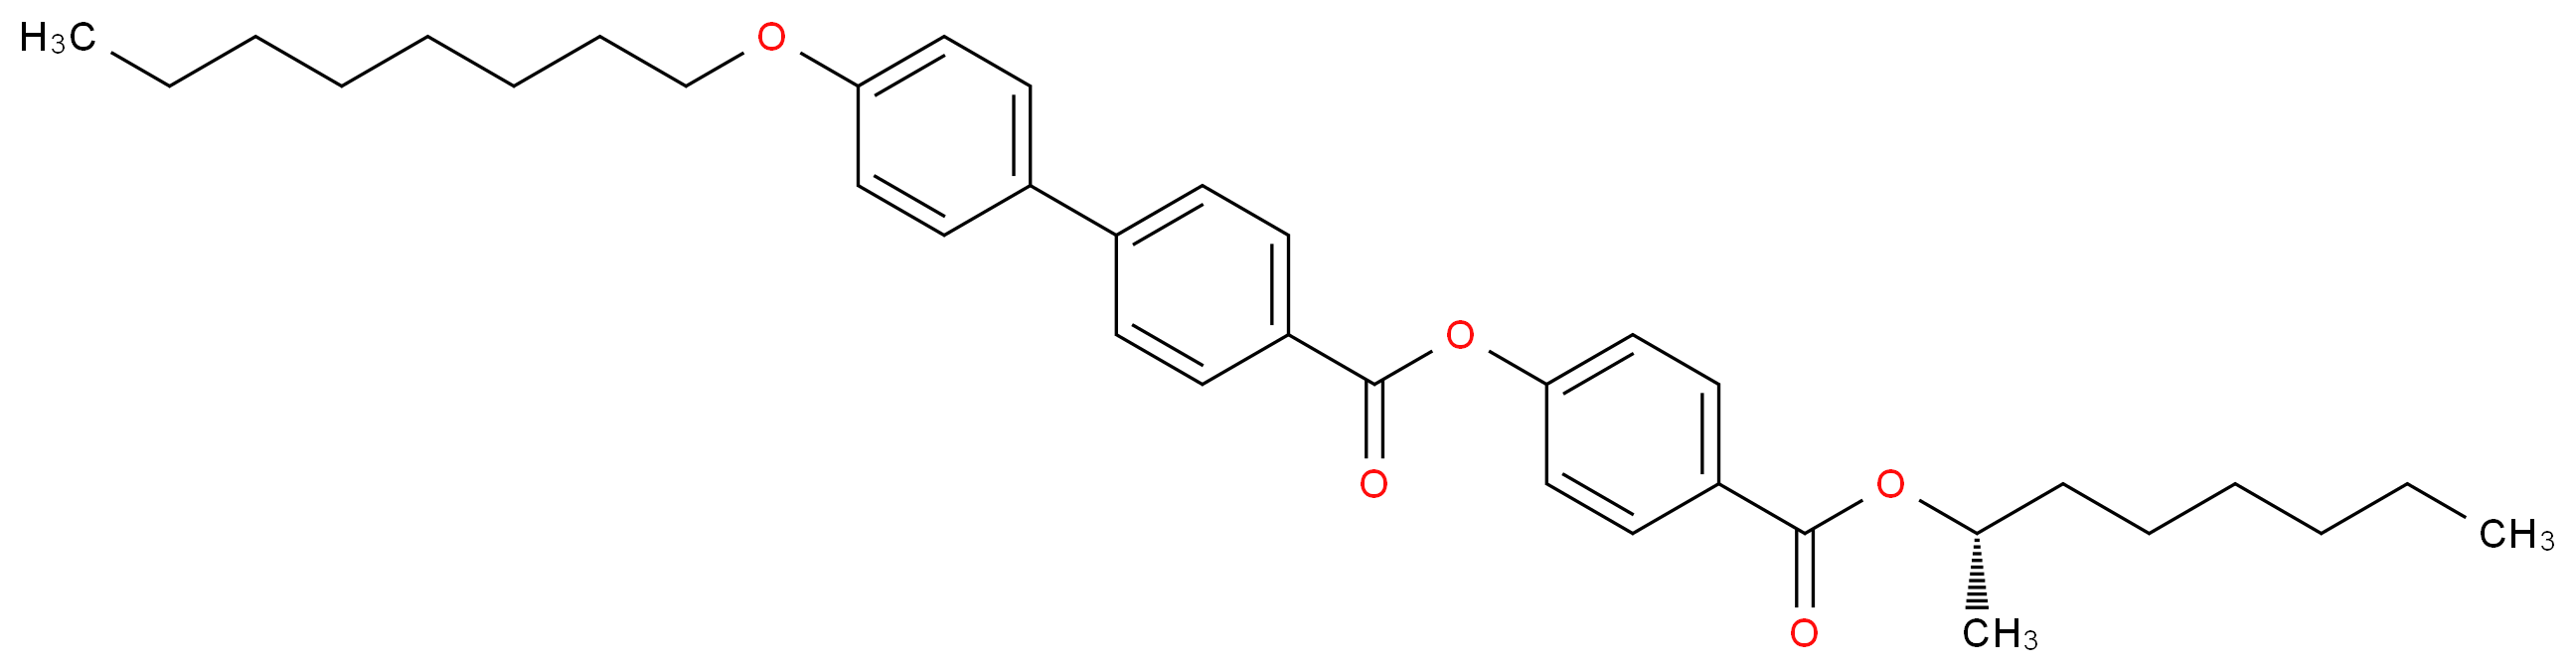 CAS_112901-67-4 molecular structure